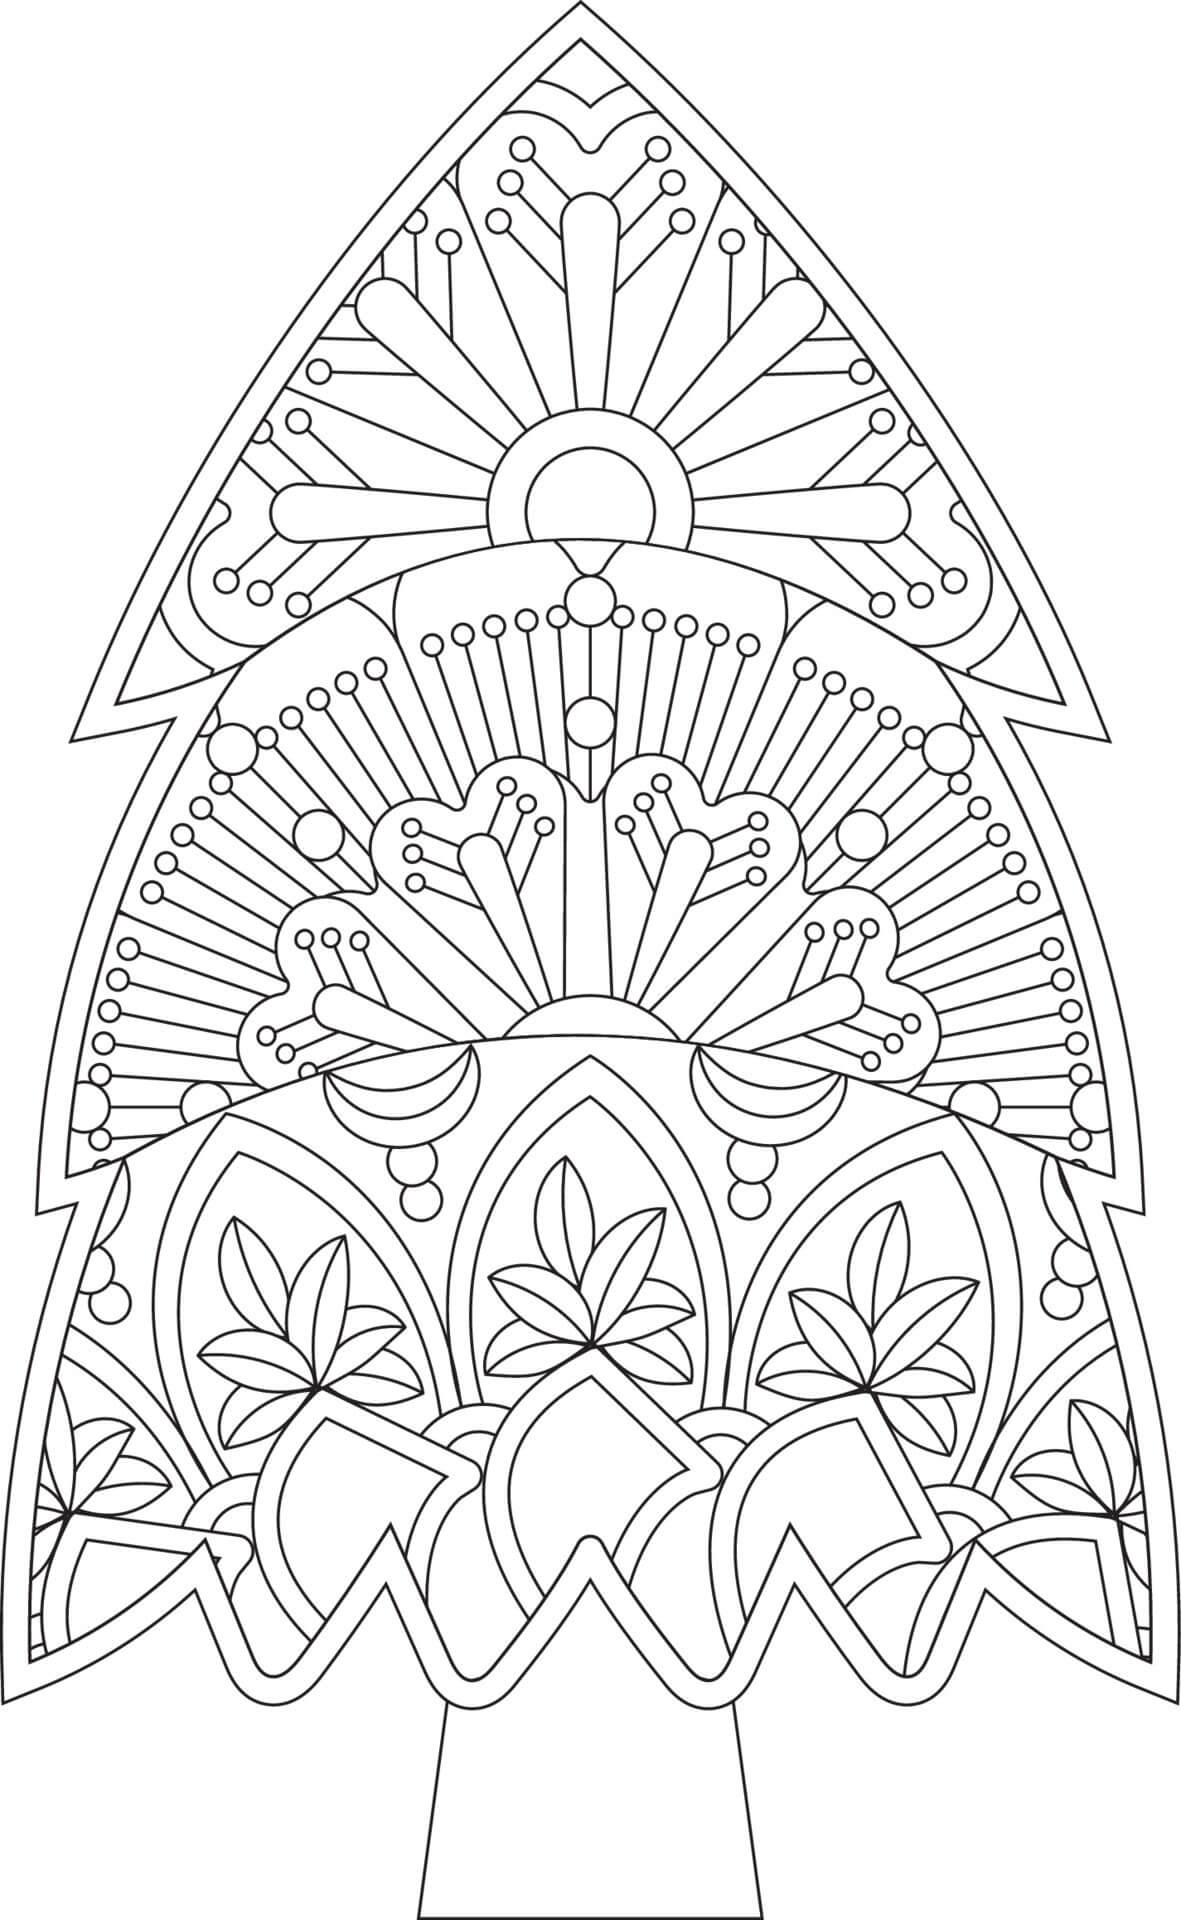 Mandala Christmas Tree Coloring Page - Sheet 5 Mandalas